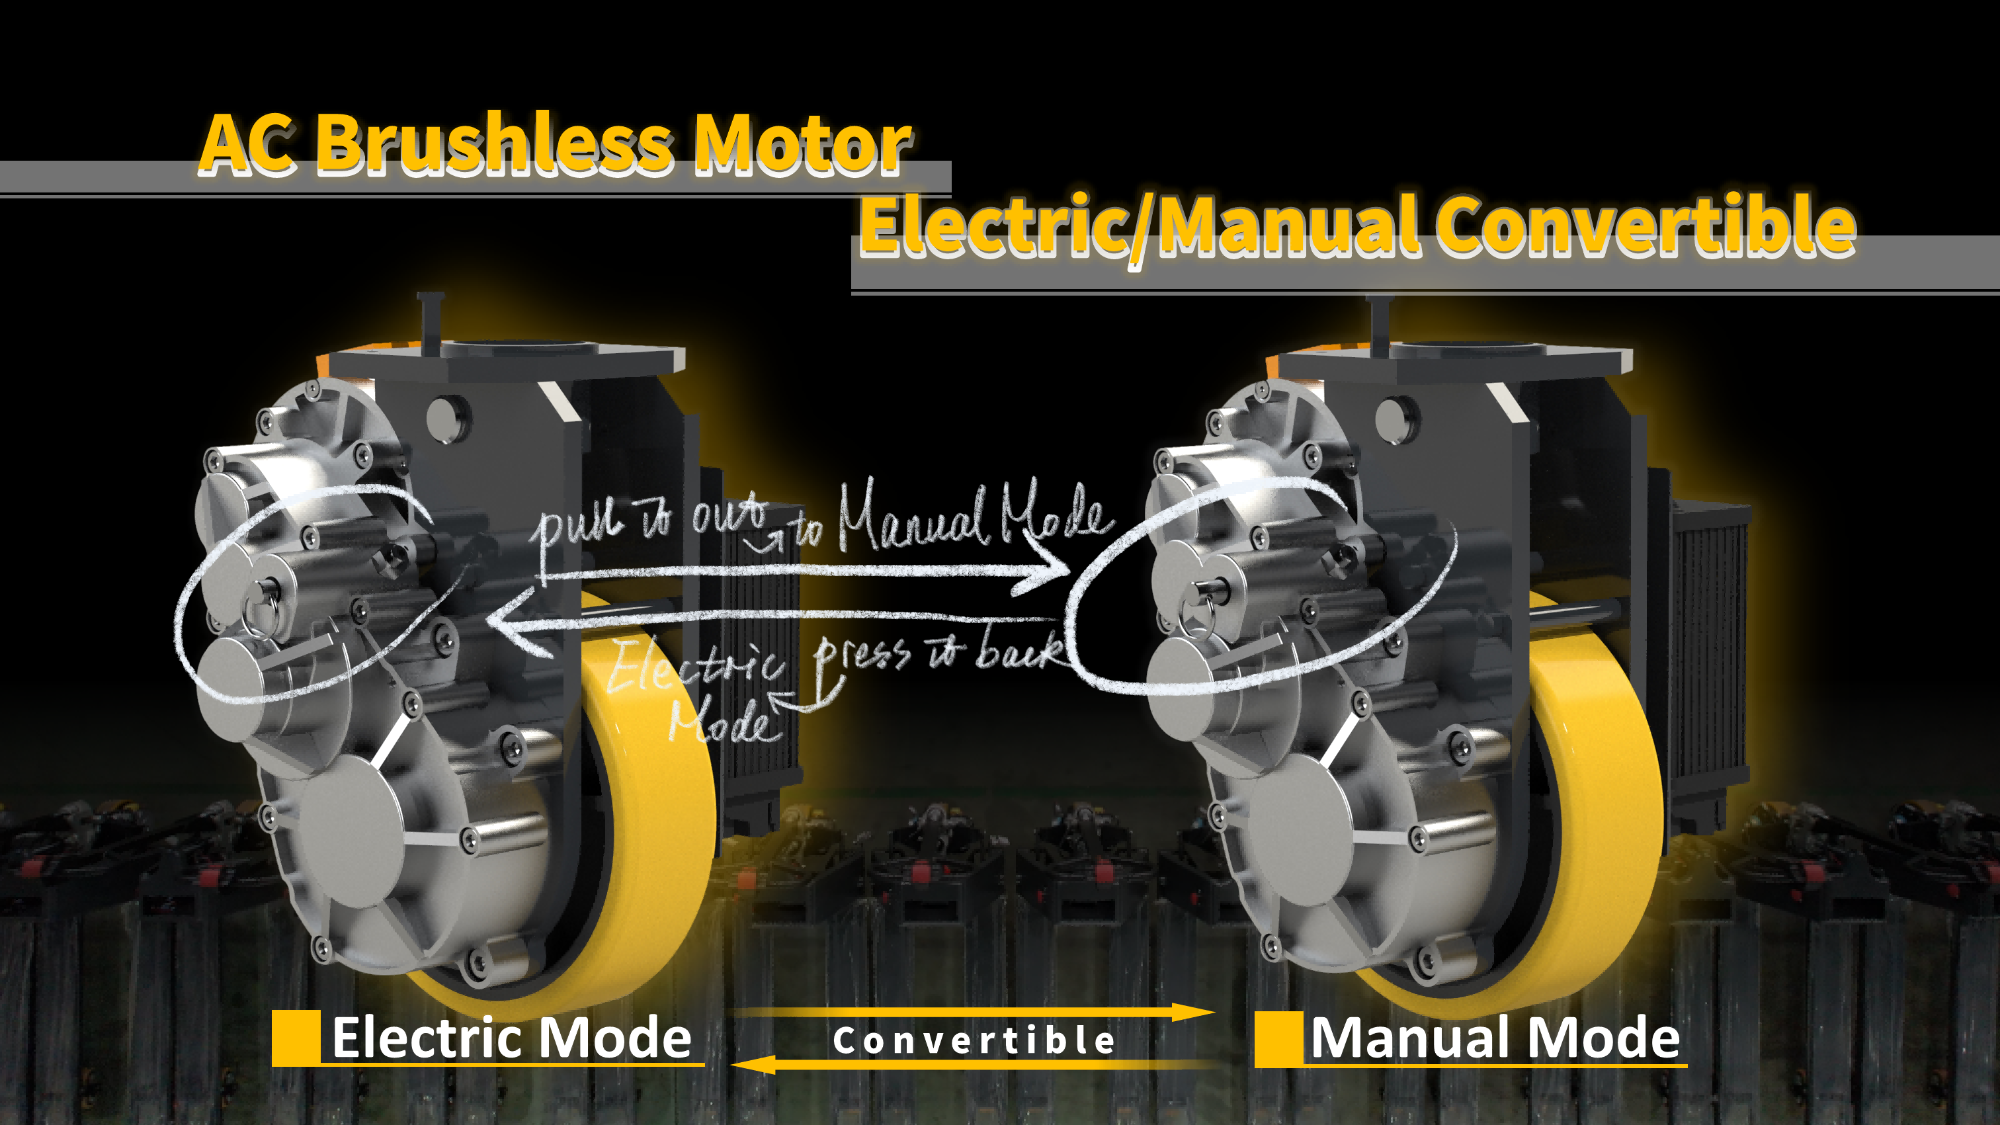 Manual/Electric convertible motor